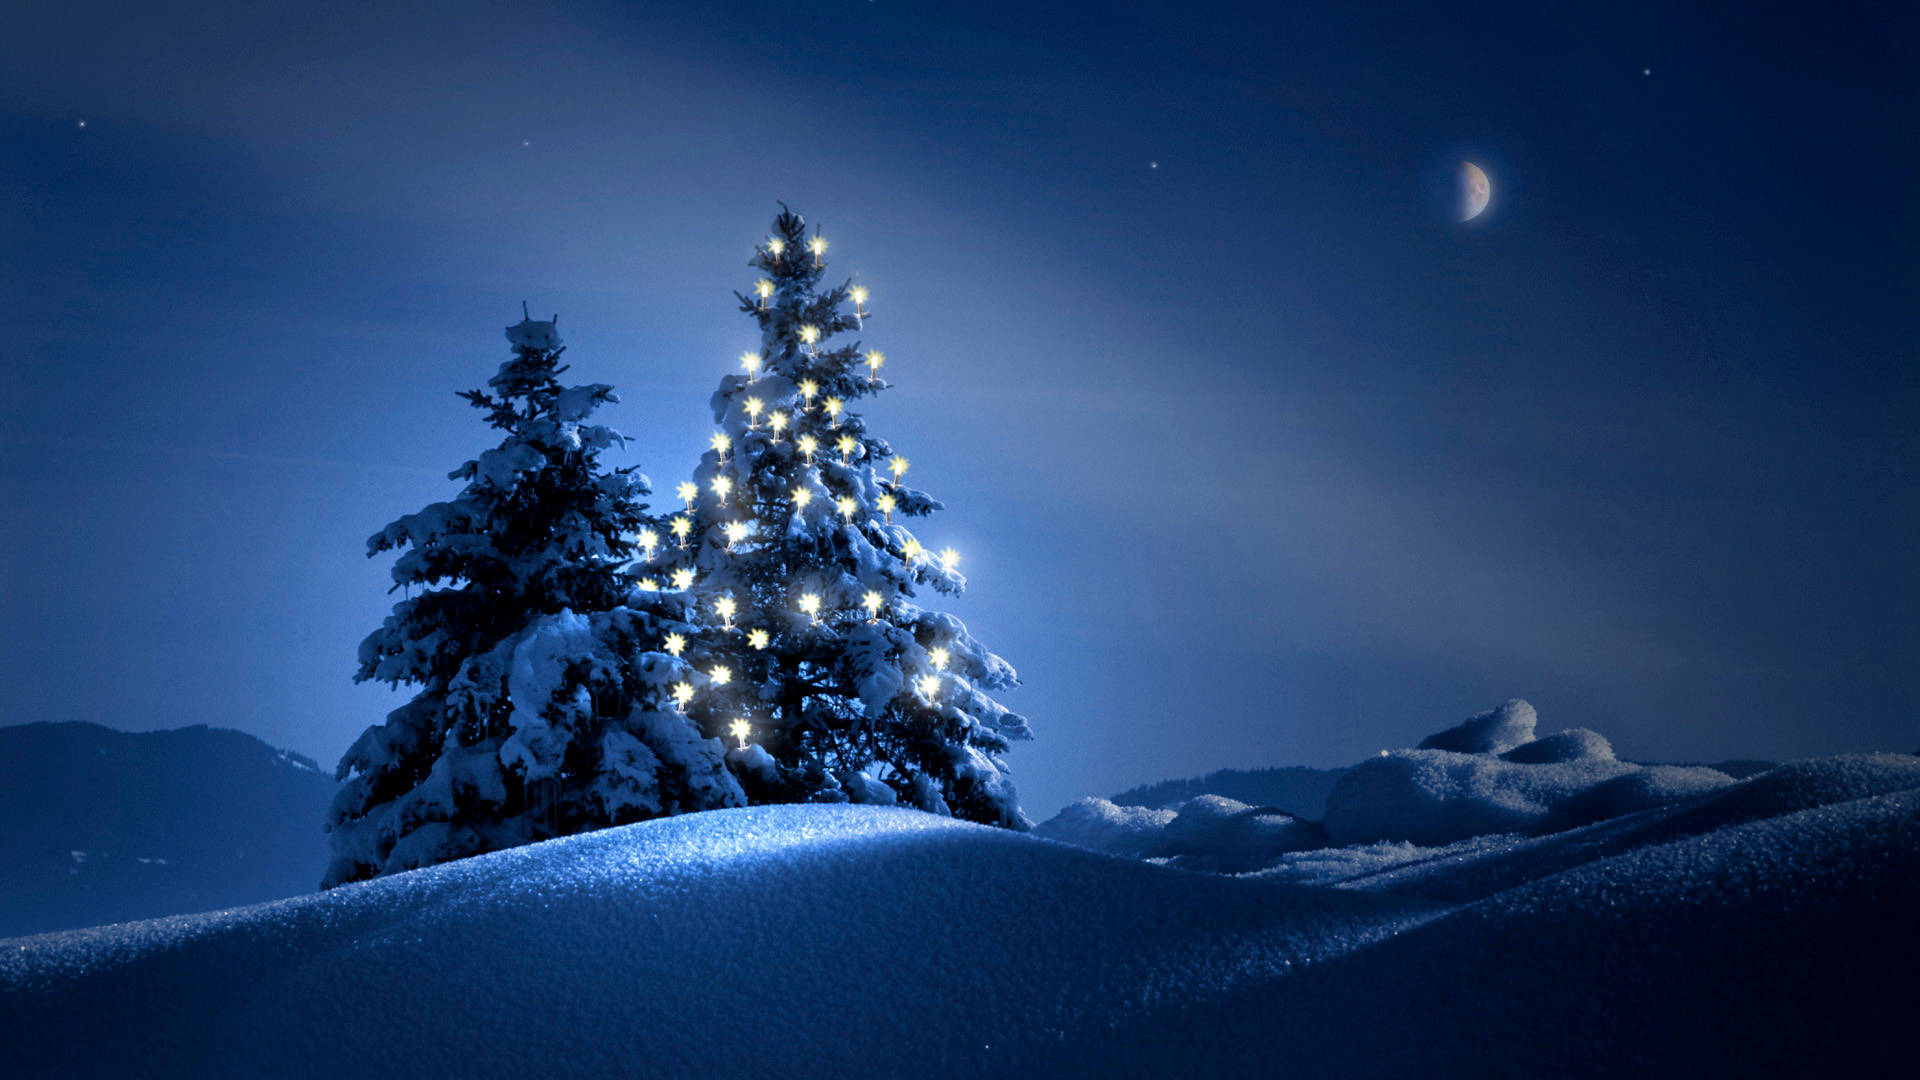 Hd Scenery Night Christmas Tree Wallpaper